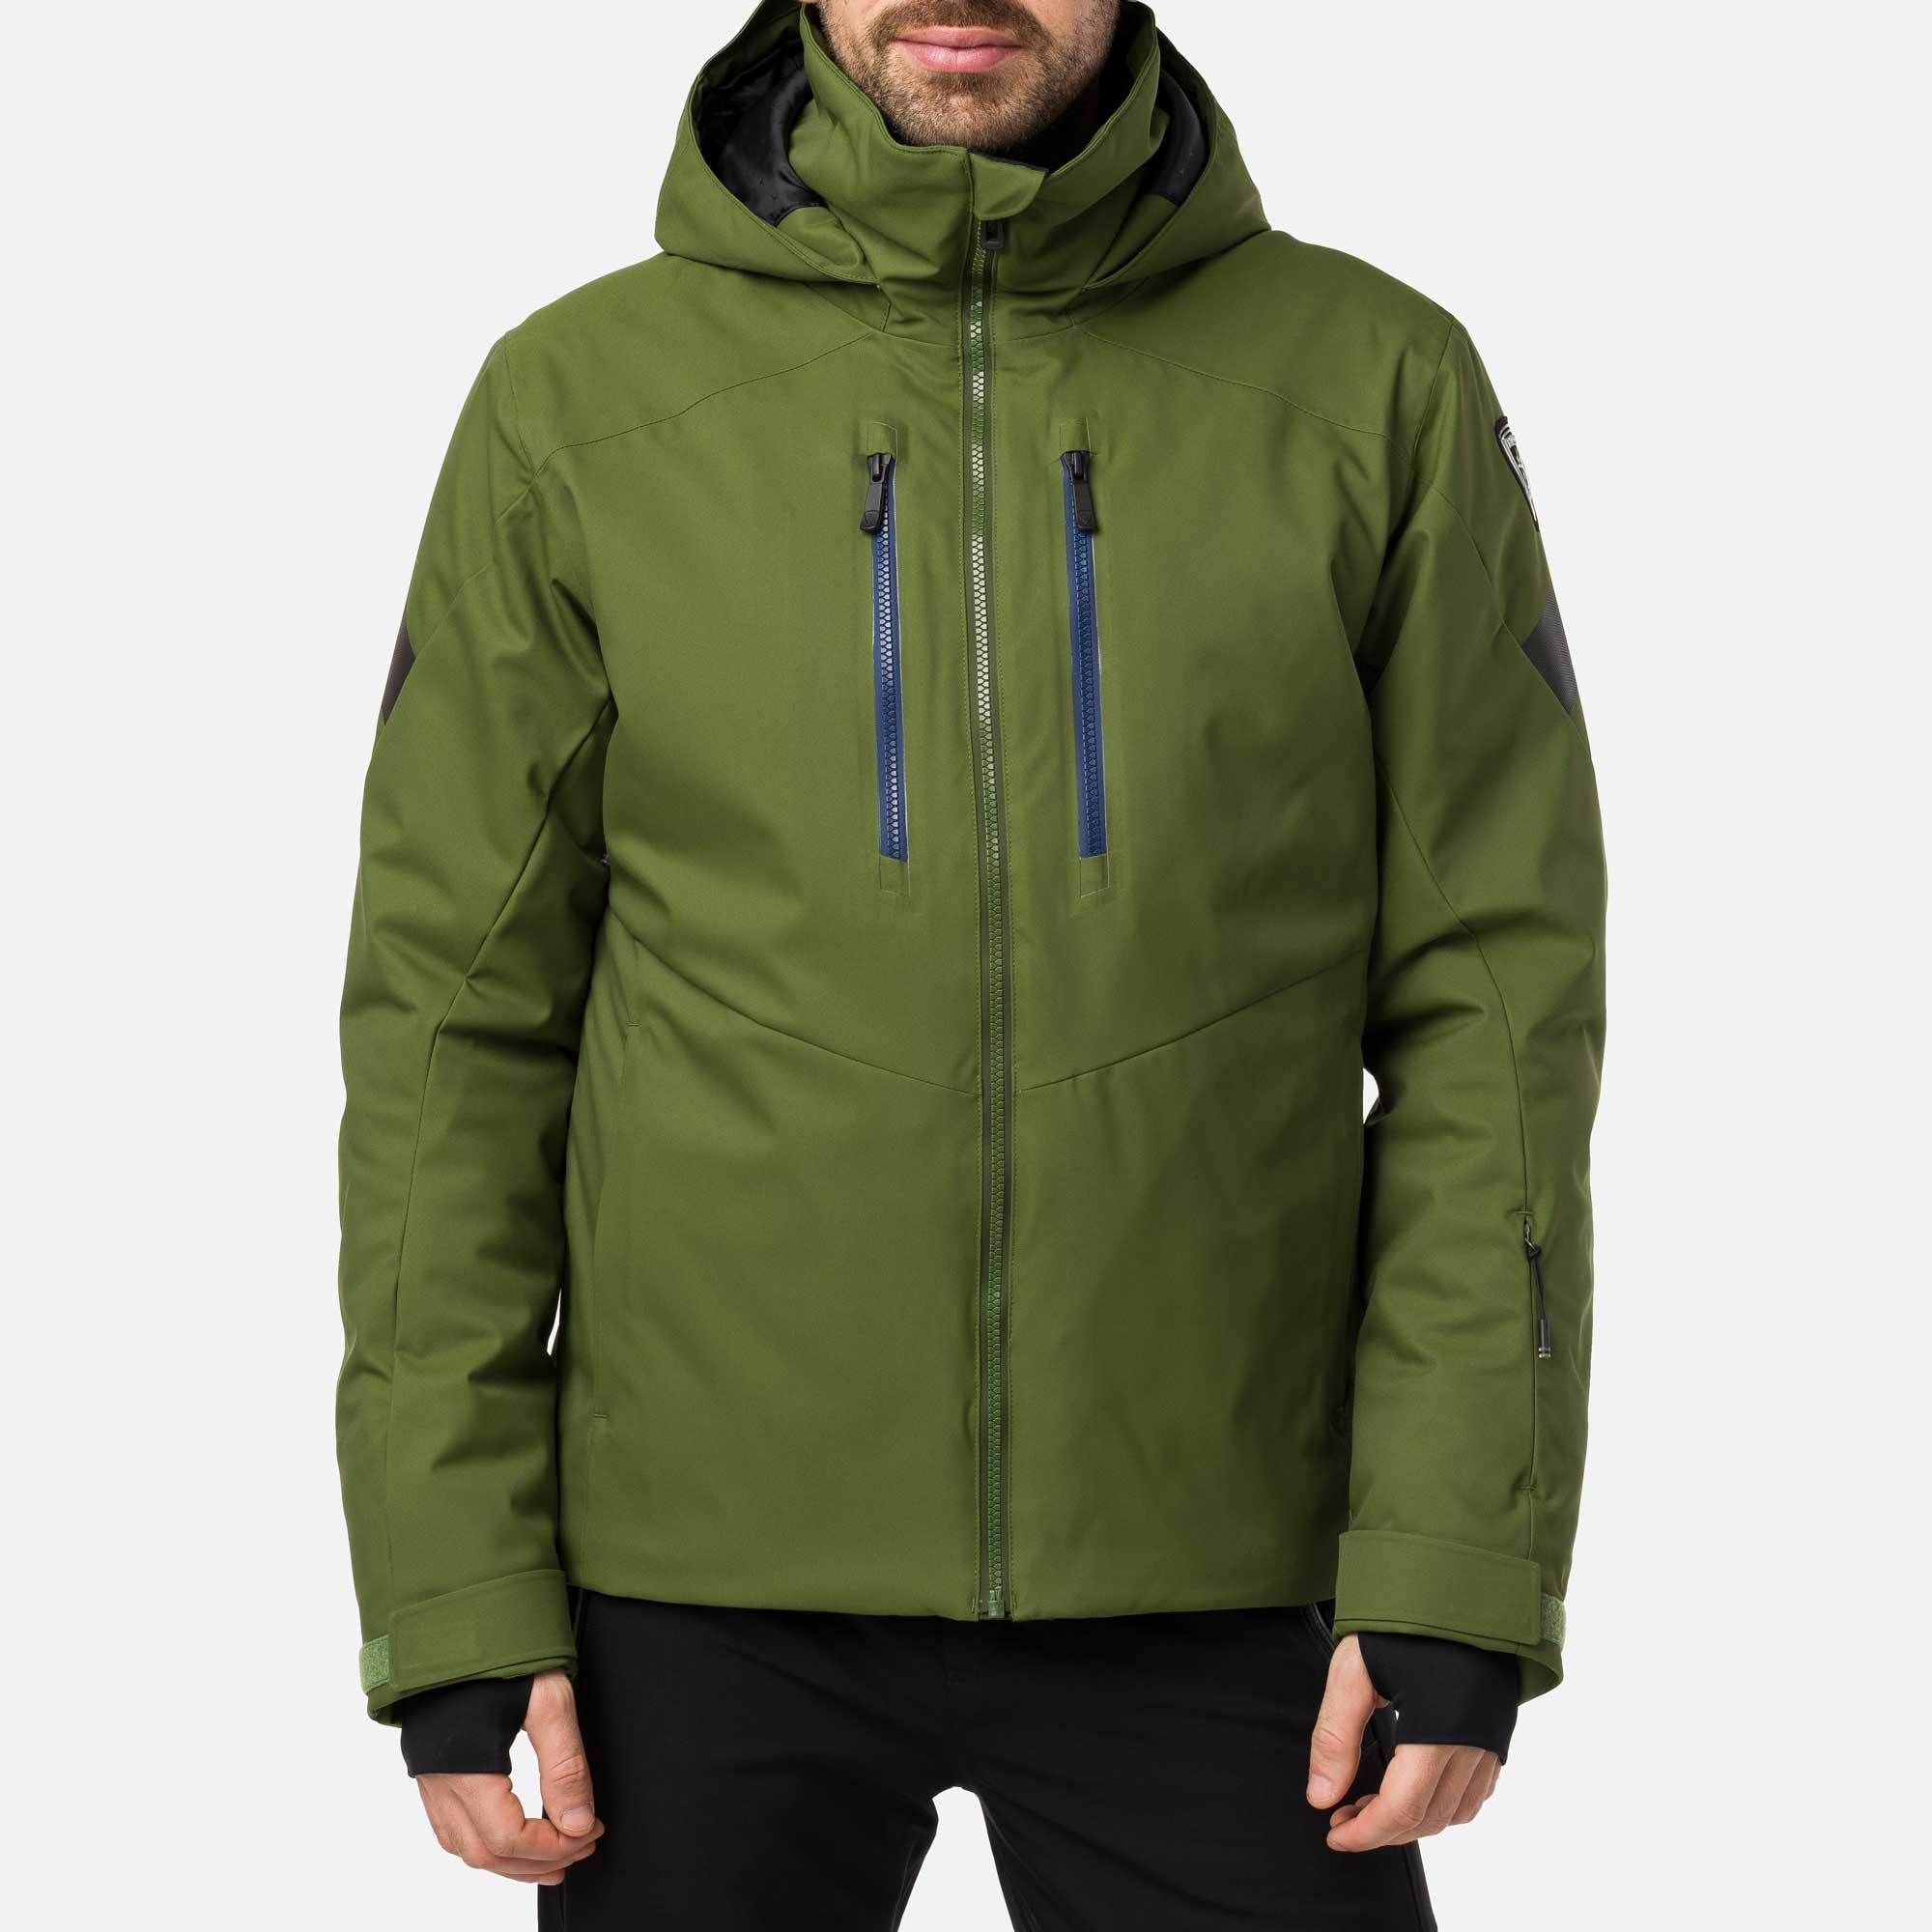 Rossignol Mens Fonction Ski Jacket – Size Medium – Snow Sports Jacket